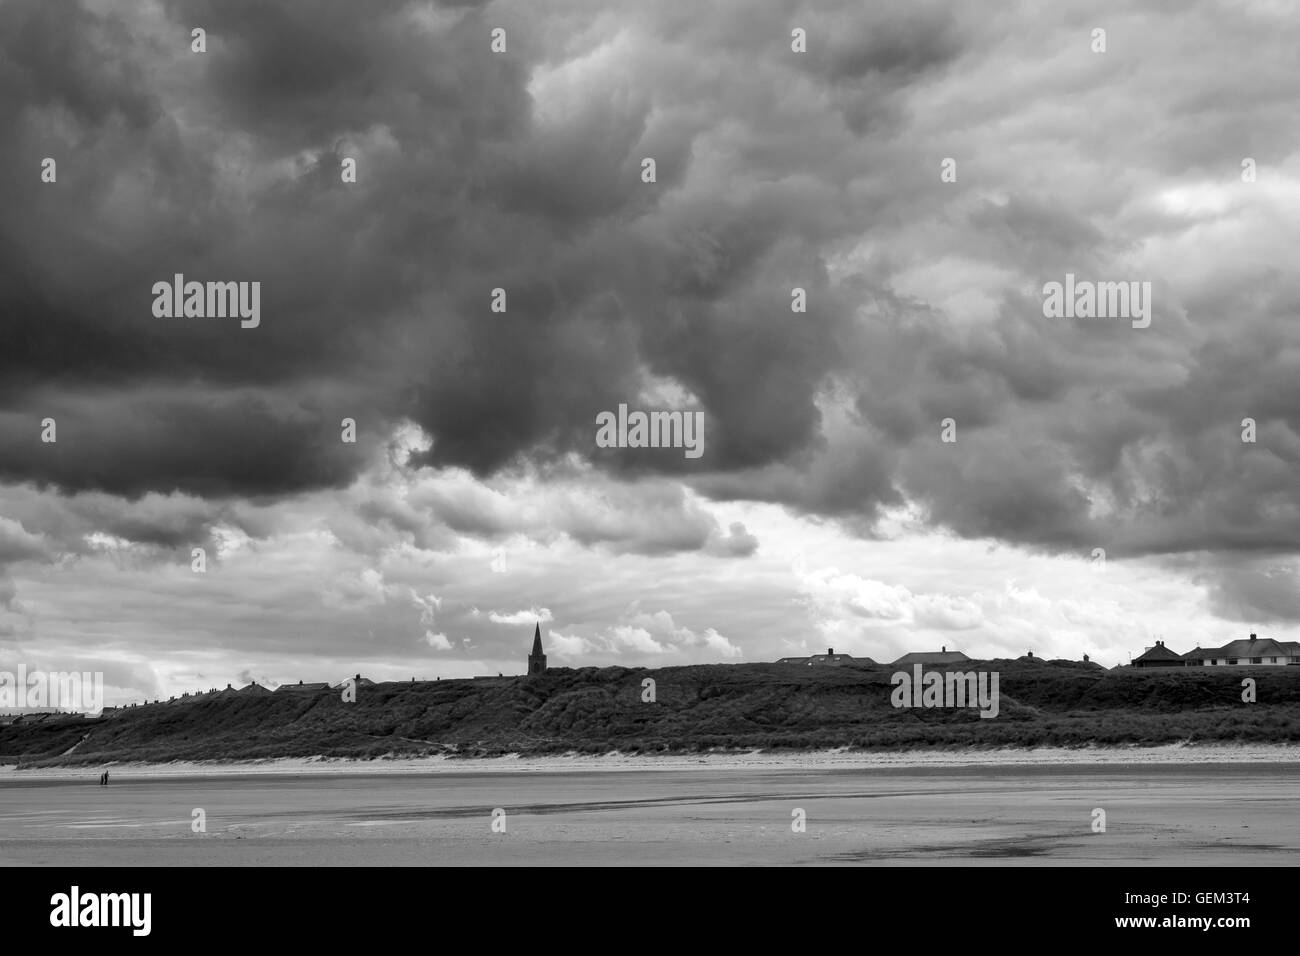 Church Spire, Stormy Sky and Beach, Marske by the Sea, North Yorkshire Stock Photo